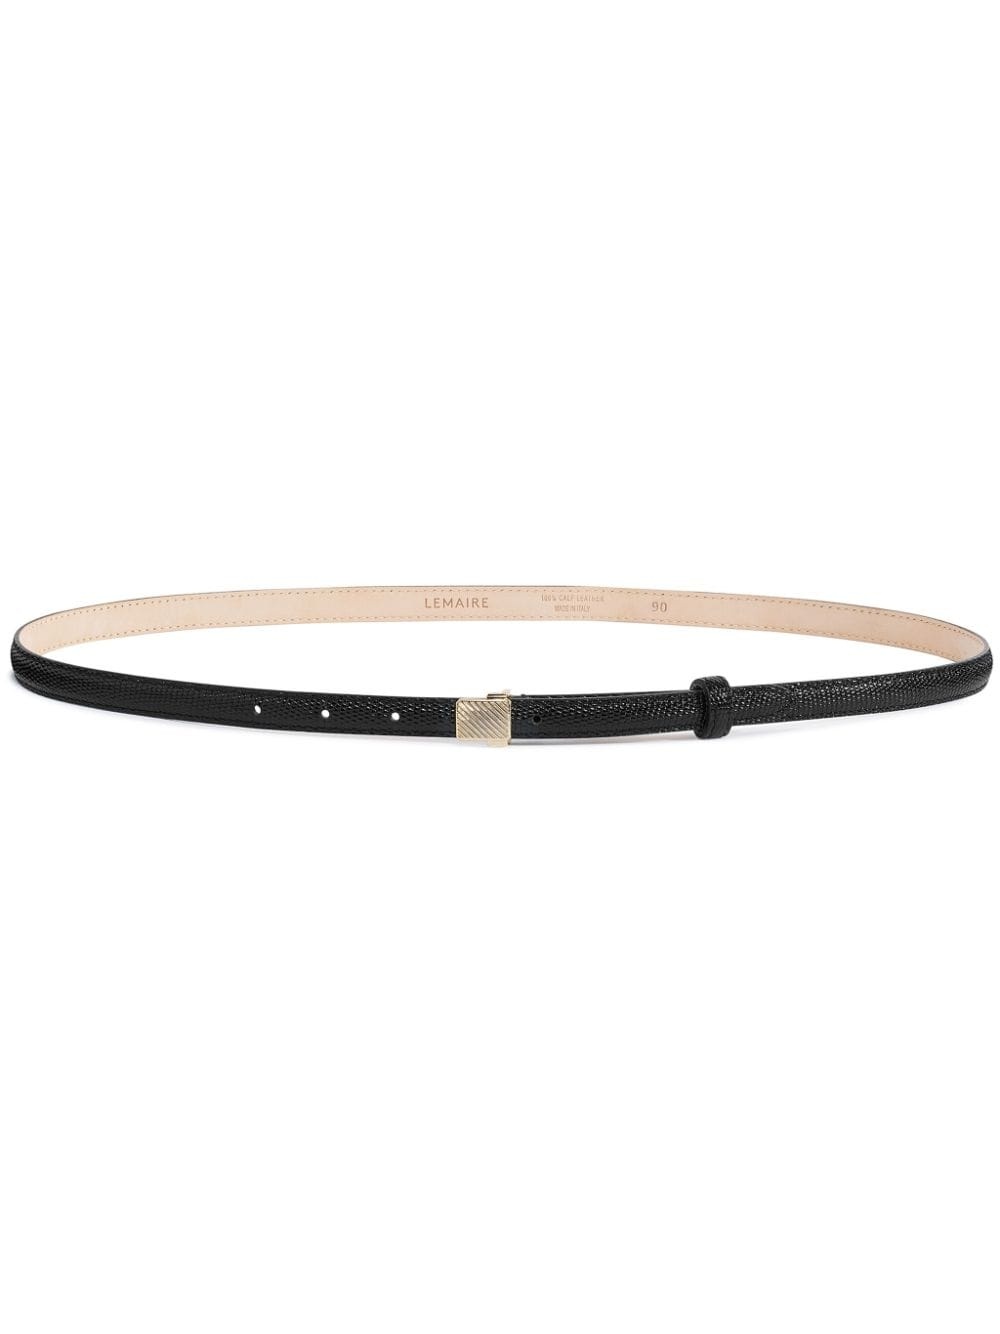 skinny leather belt - 1